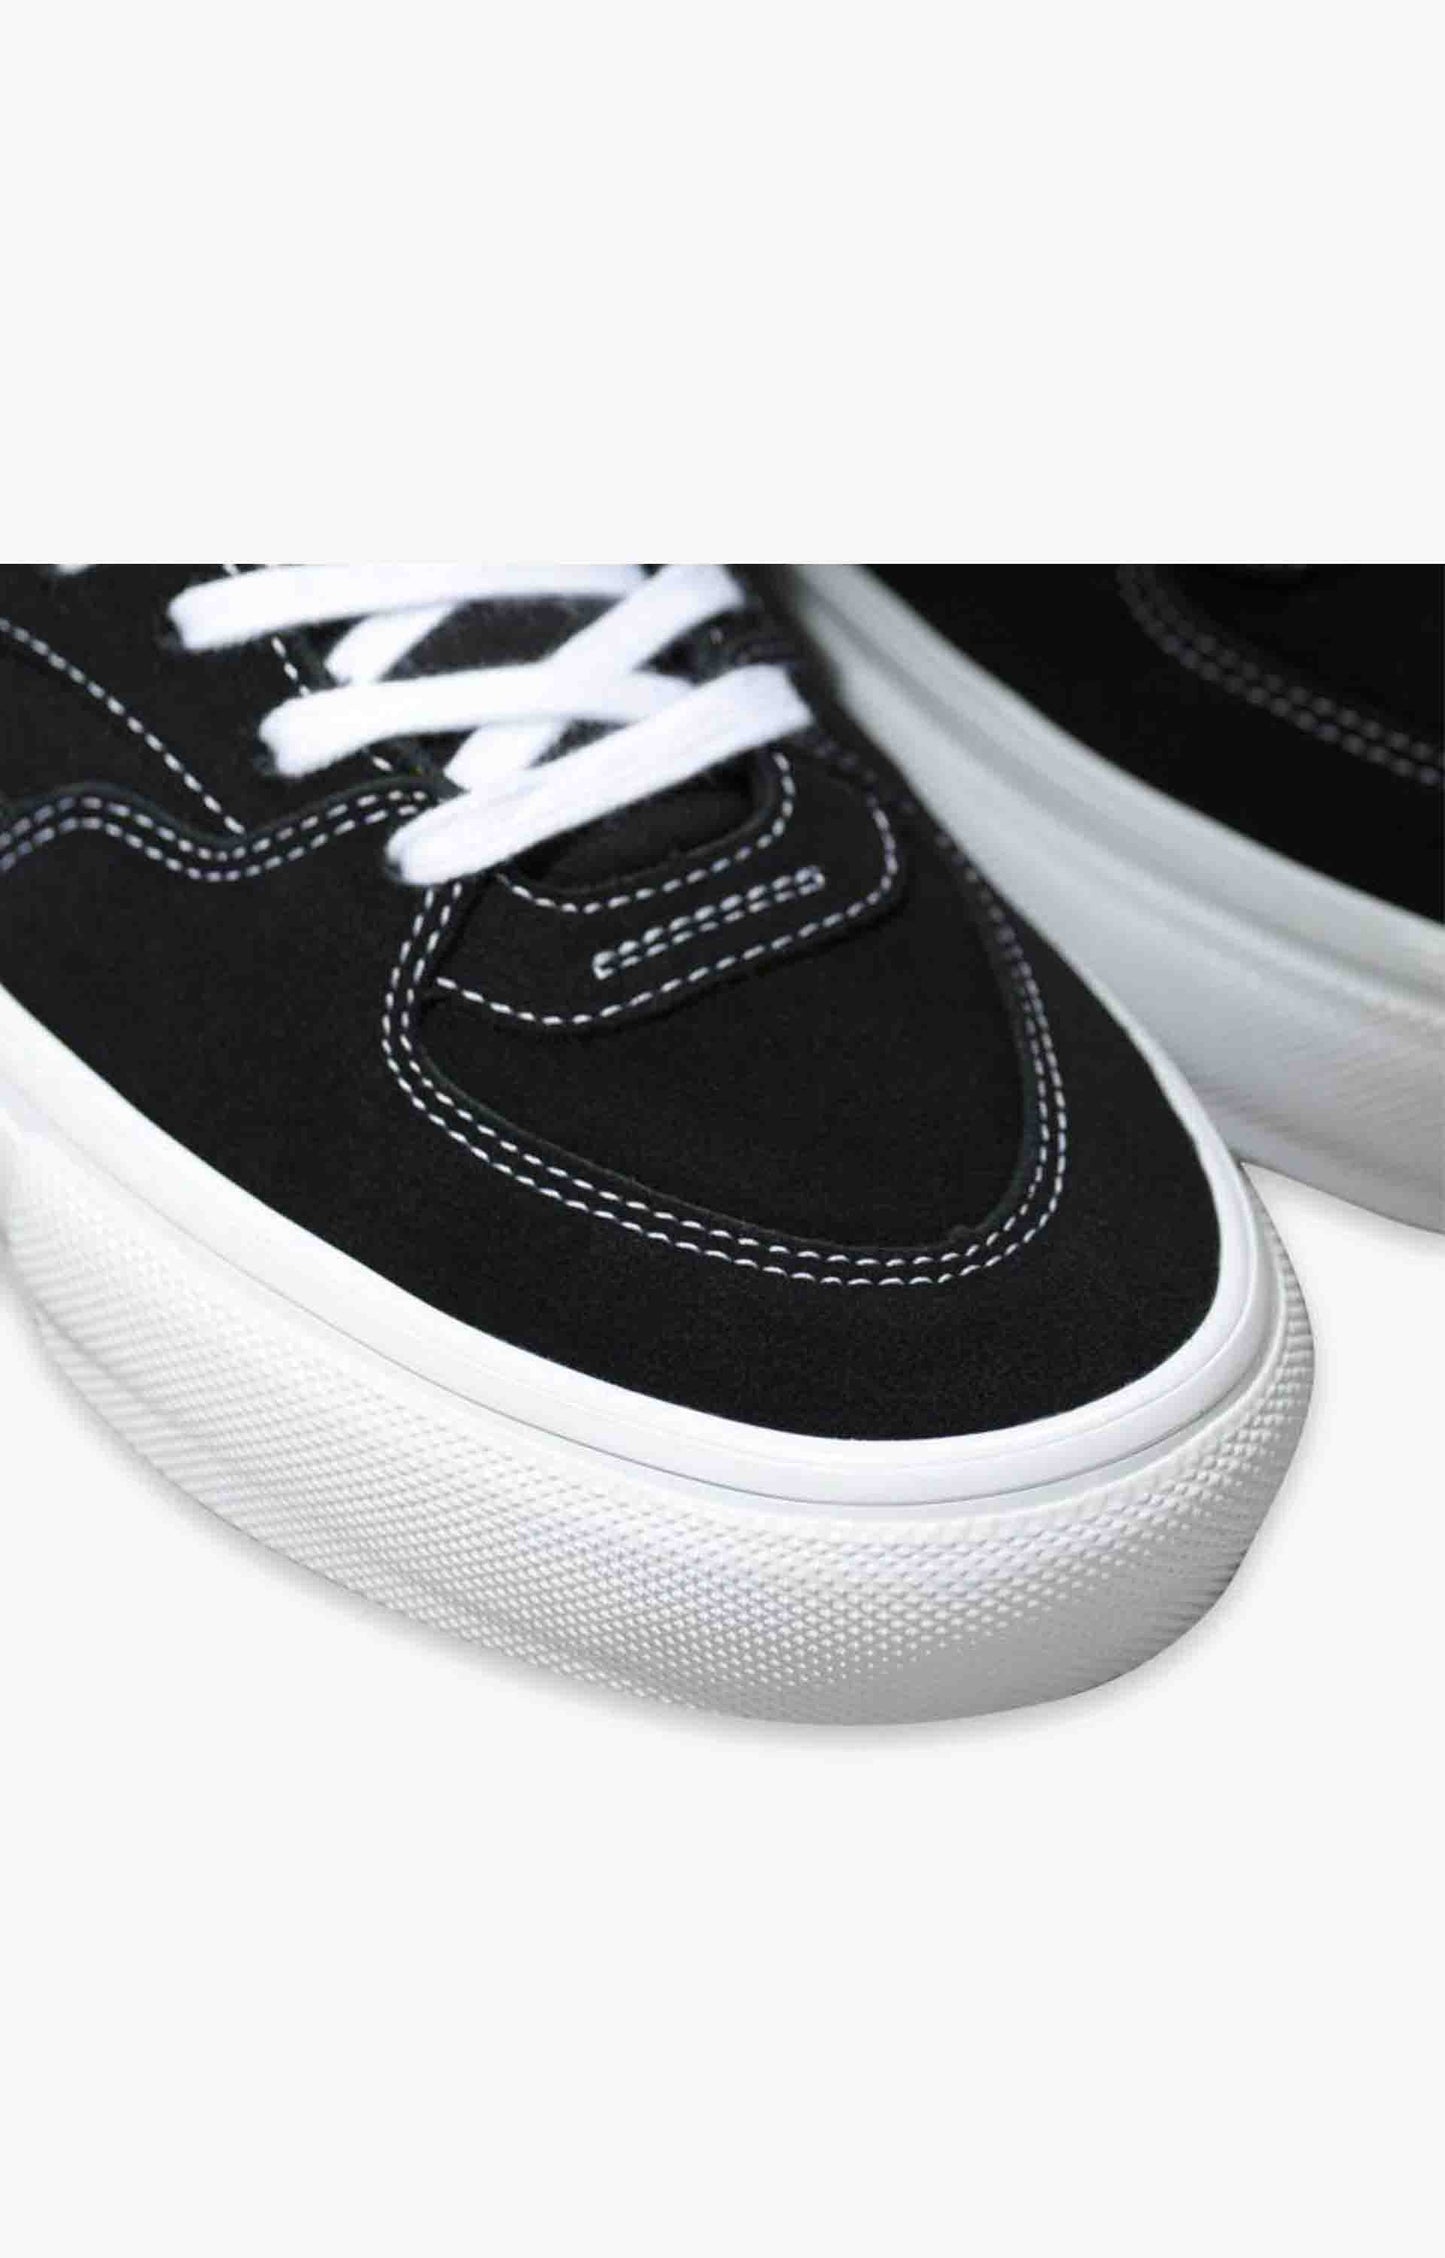 Vans Skate Half Cab Pro Shoes, Black/White